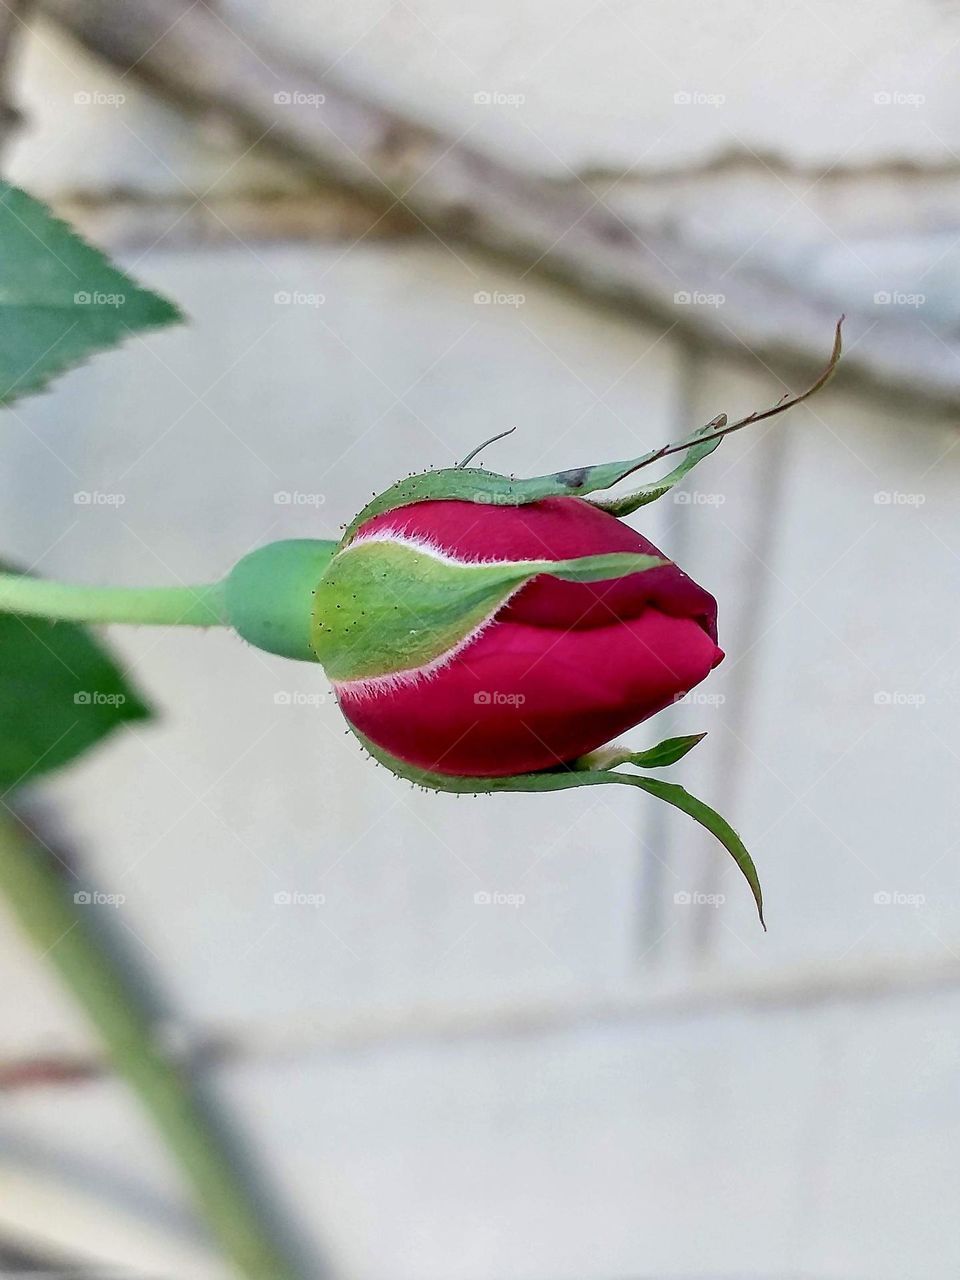 Rose bud in magenta color